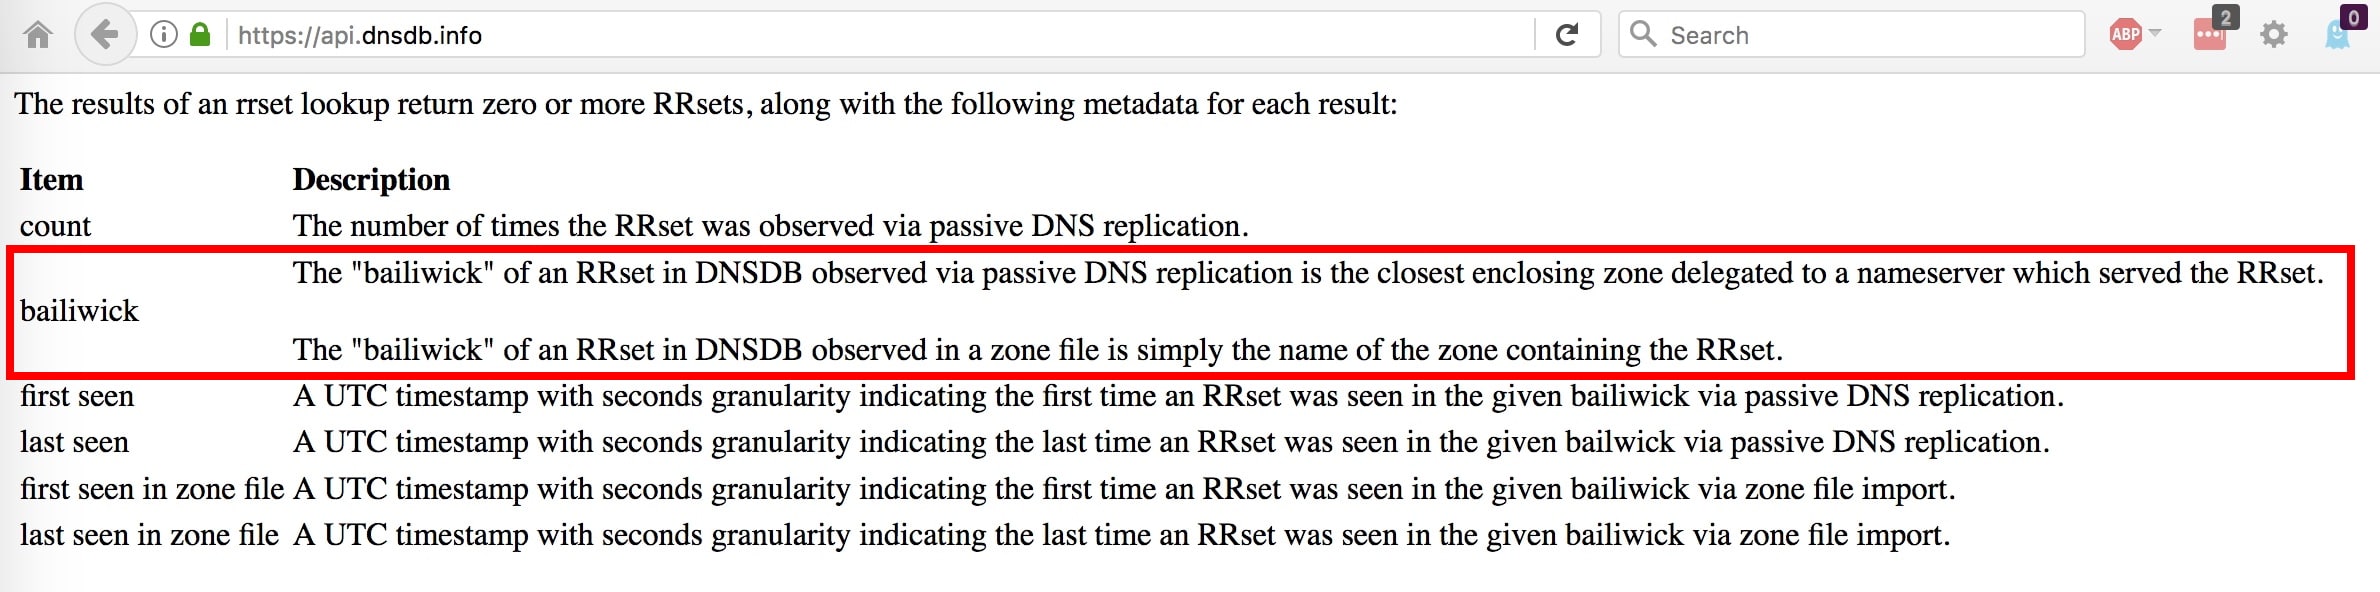 More DNSDB API Information from https://api.dnsdb.info